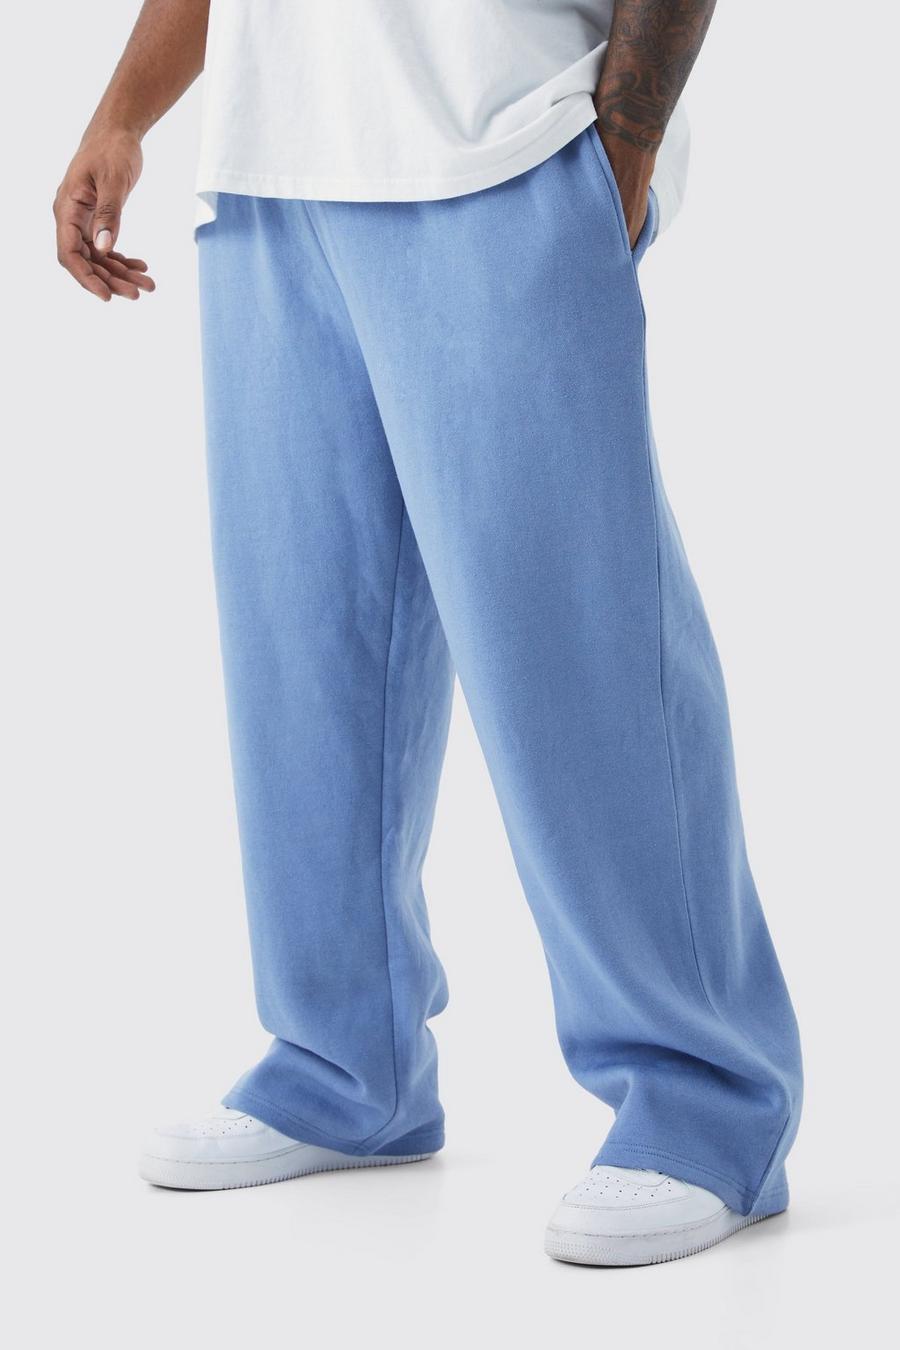 Pantalón deportivo Plus holgado, Dusty blue